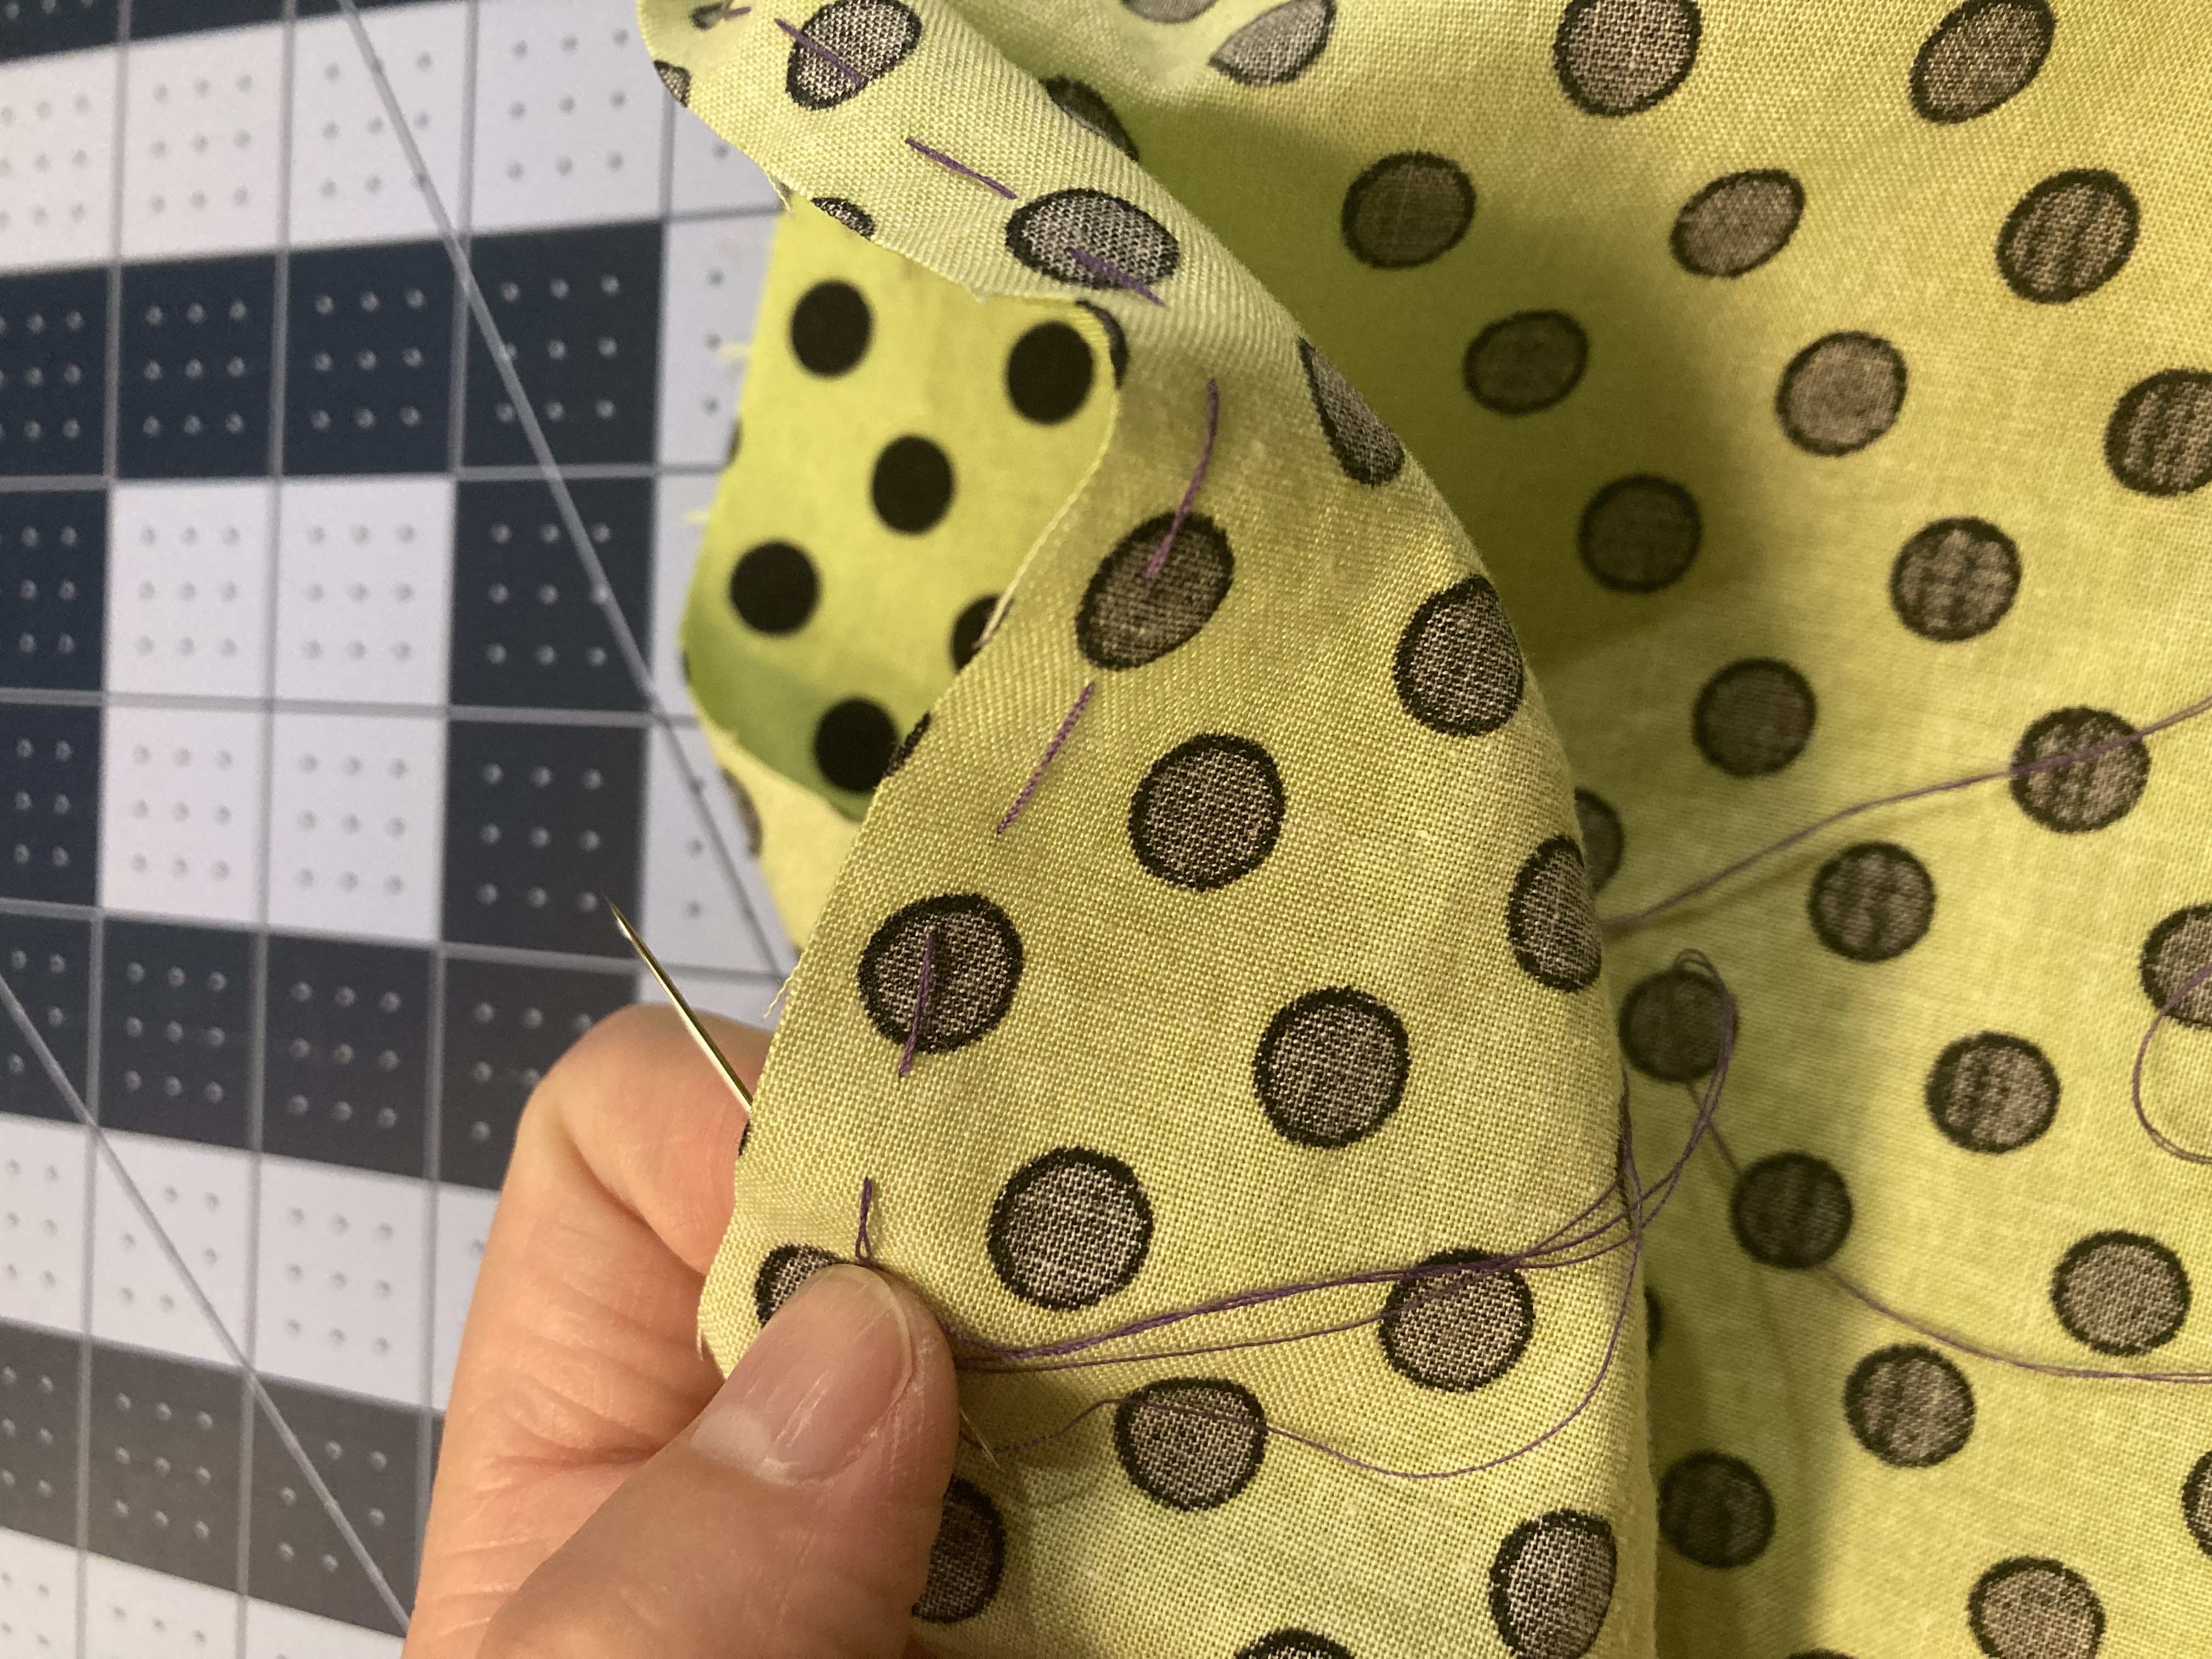 Using needle to sew through fabric